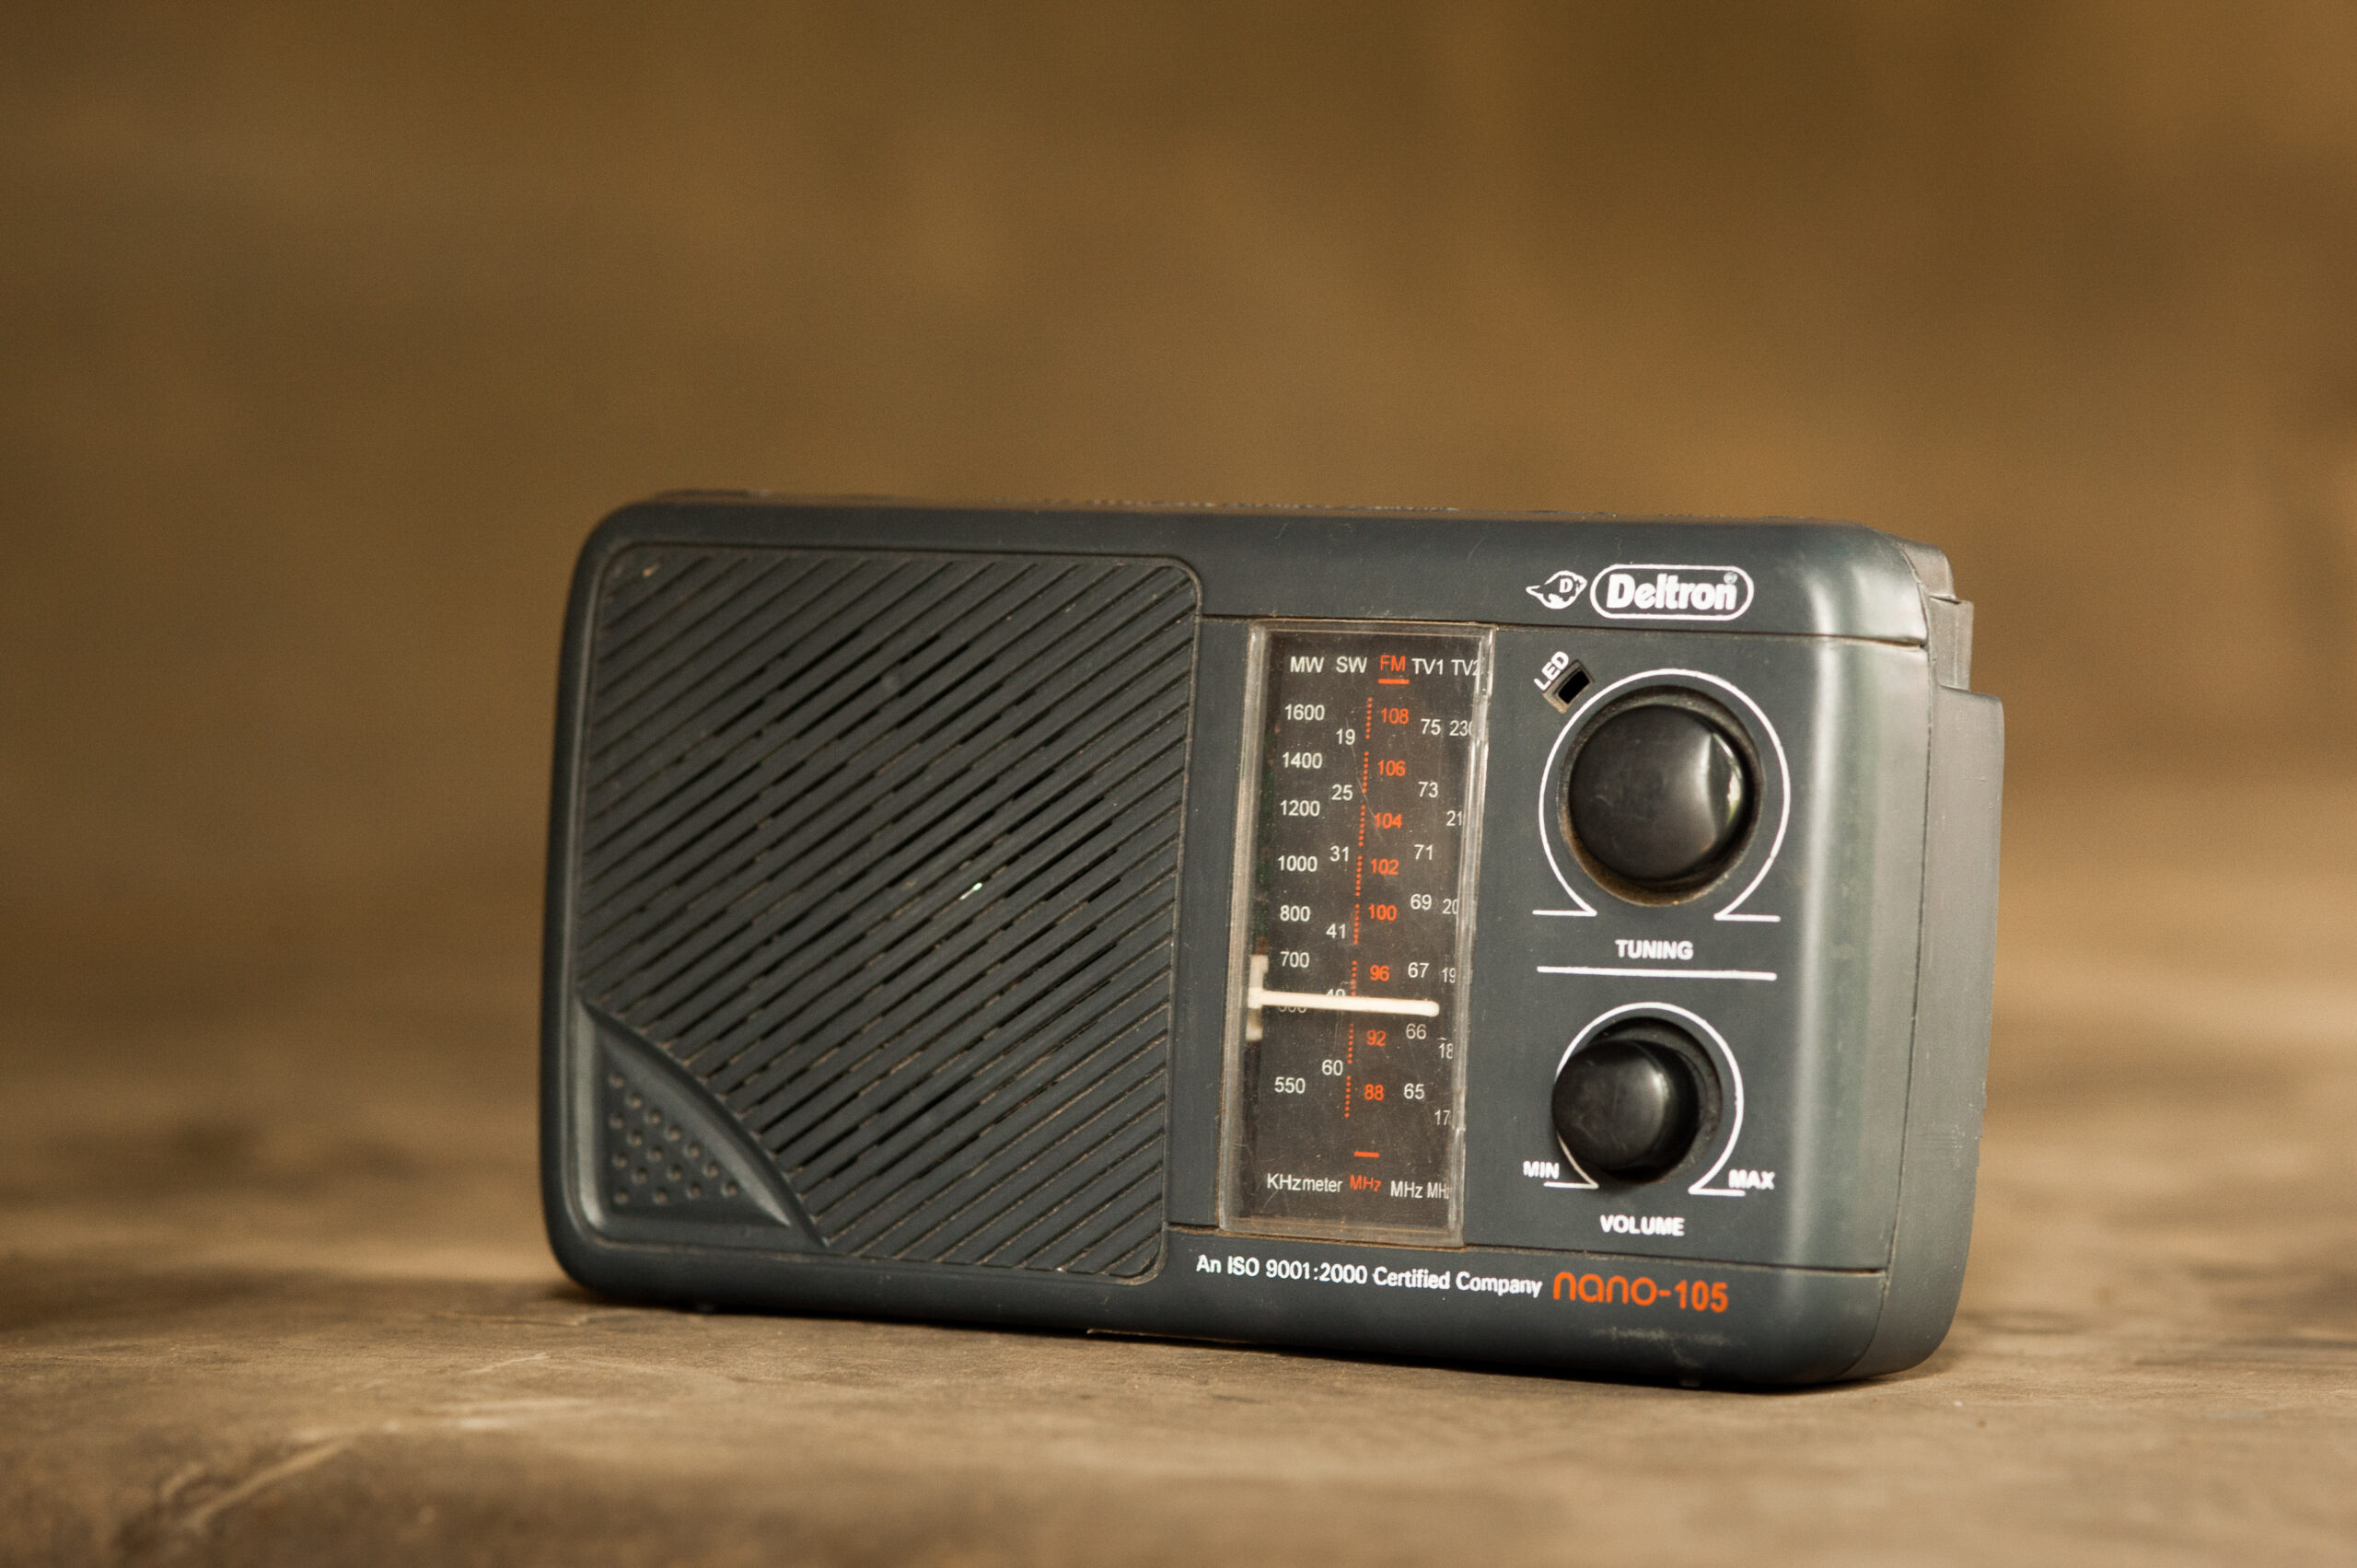 Radio used for broadcasts